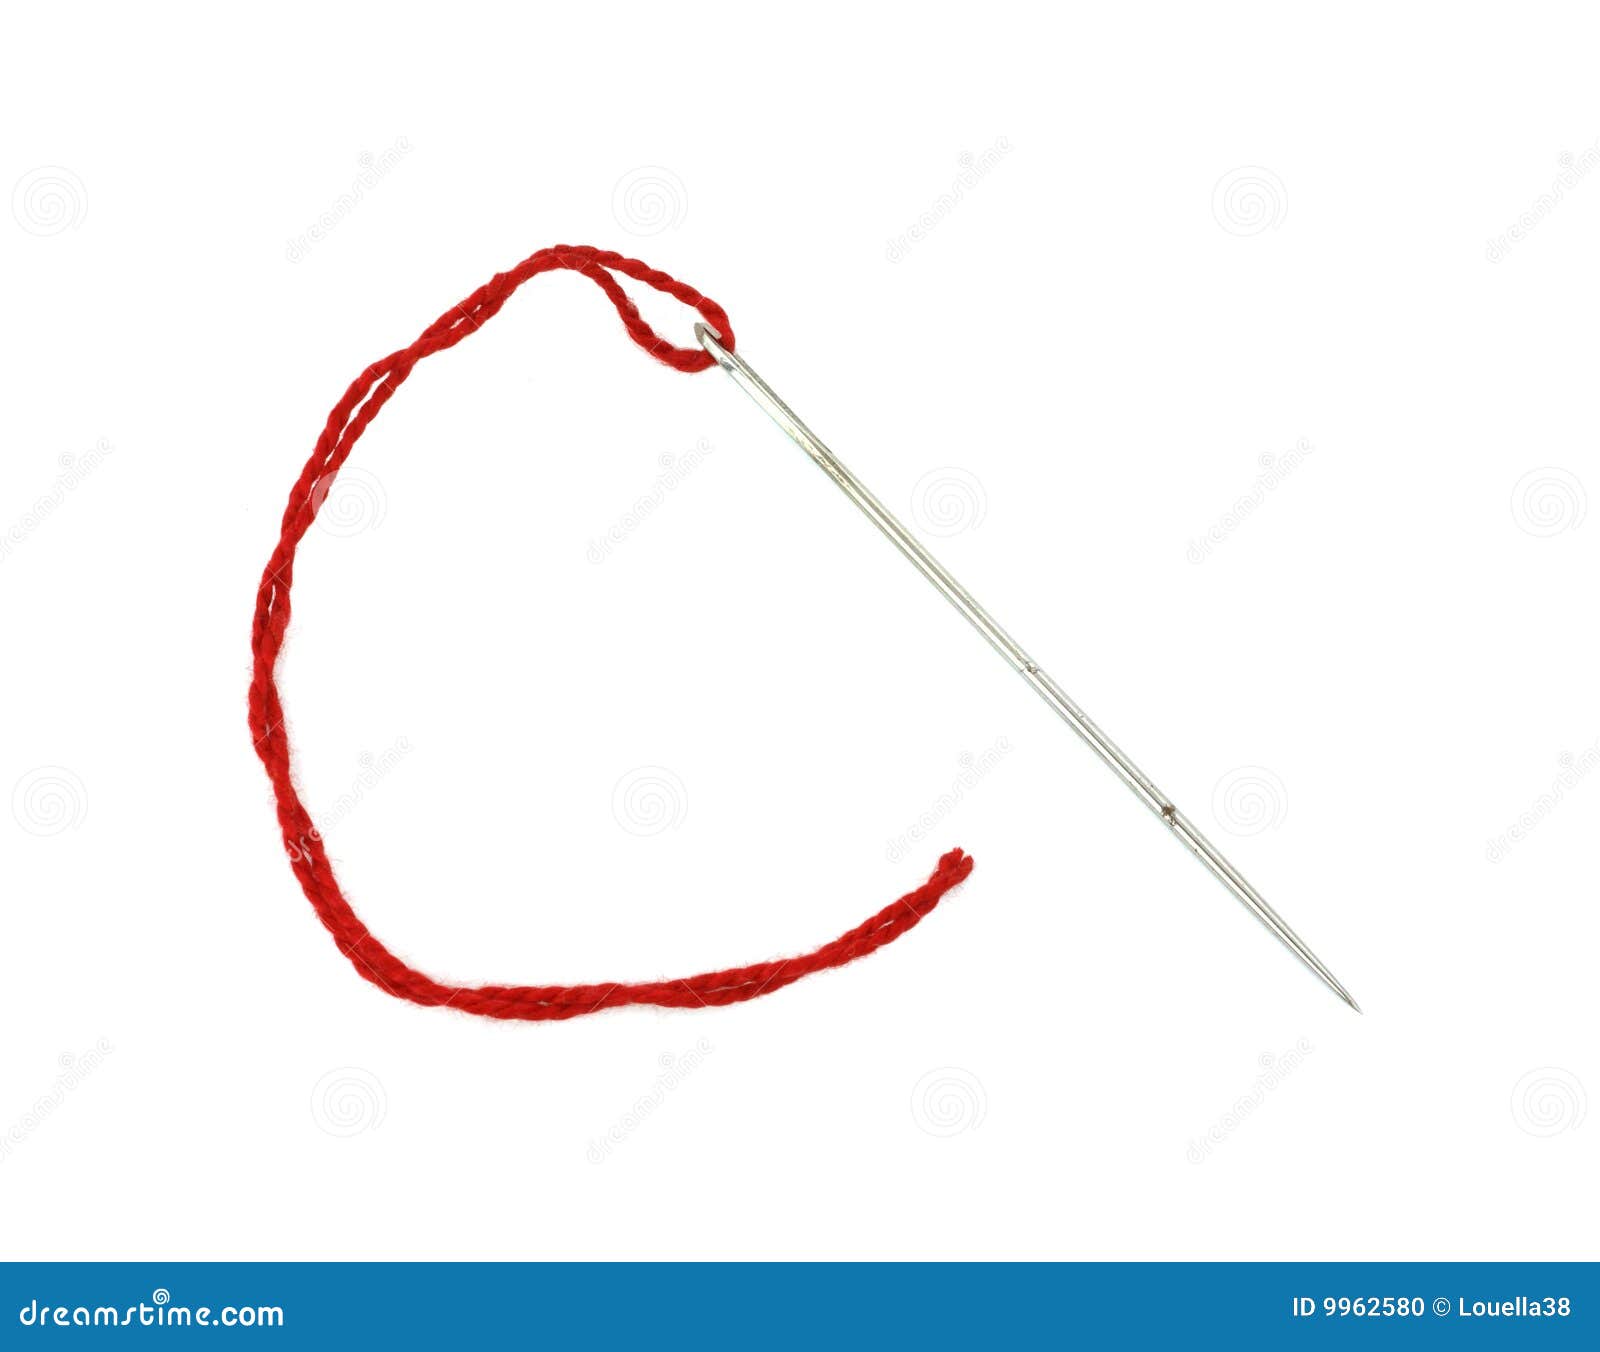 Red floss needle stock photo. Image of twisted, needle - 9962580